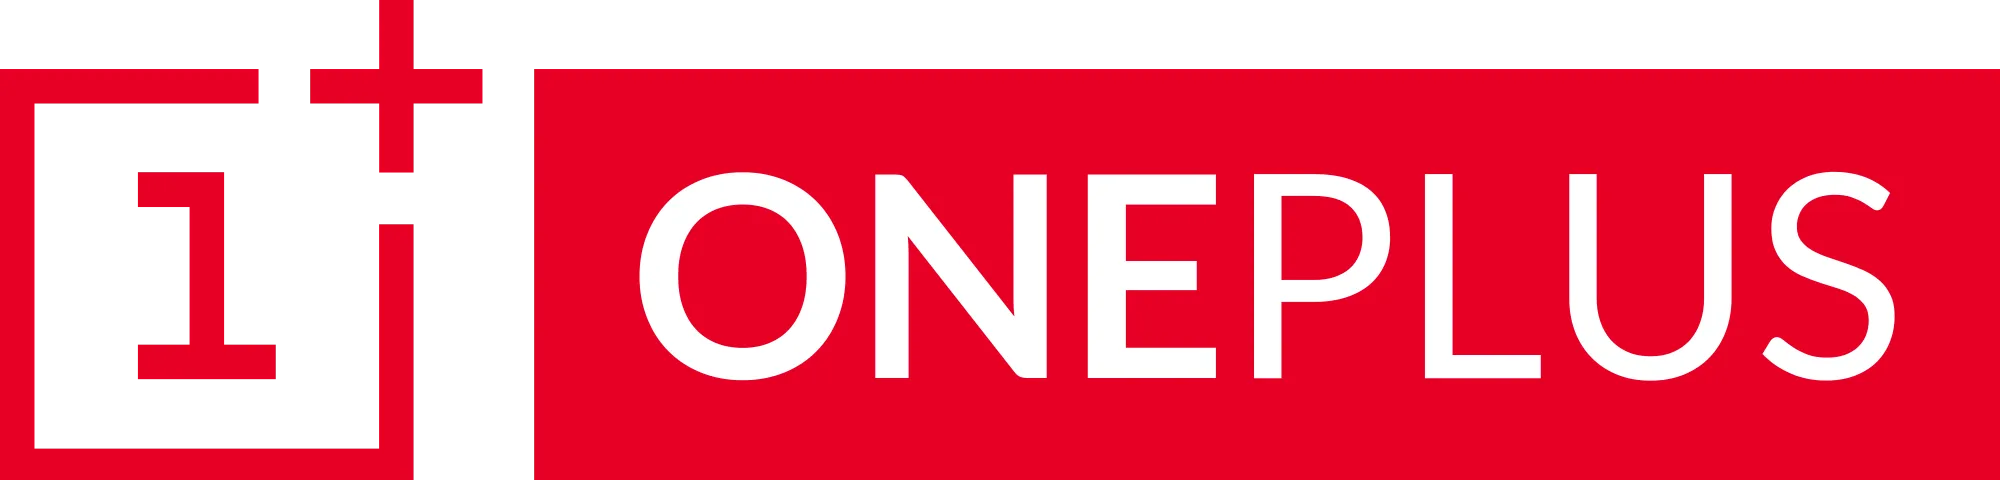 Logo for oneplus